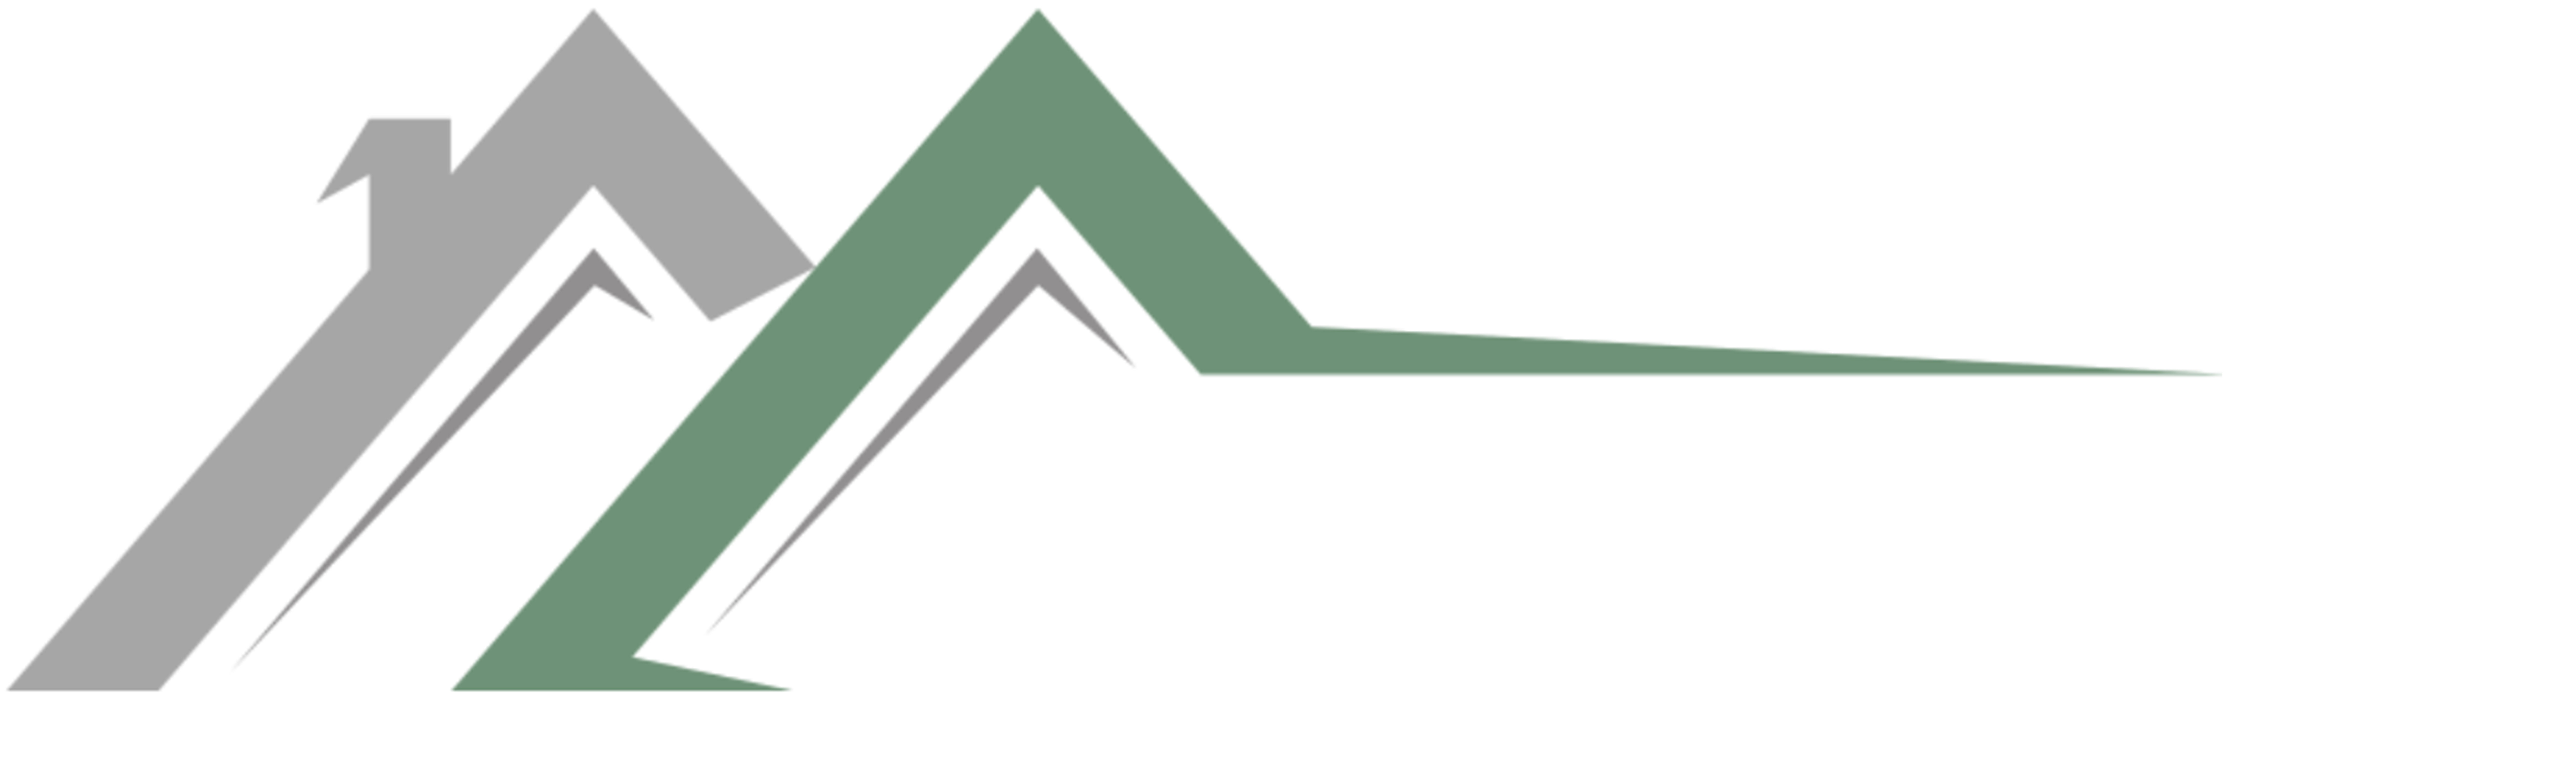 Moneta Property Solutions